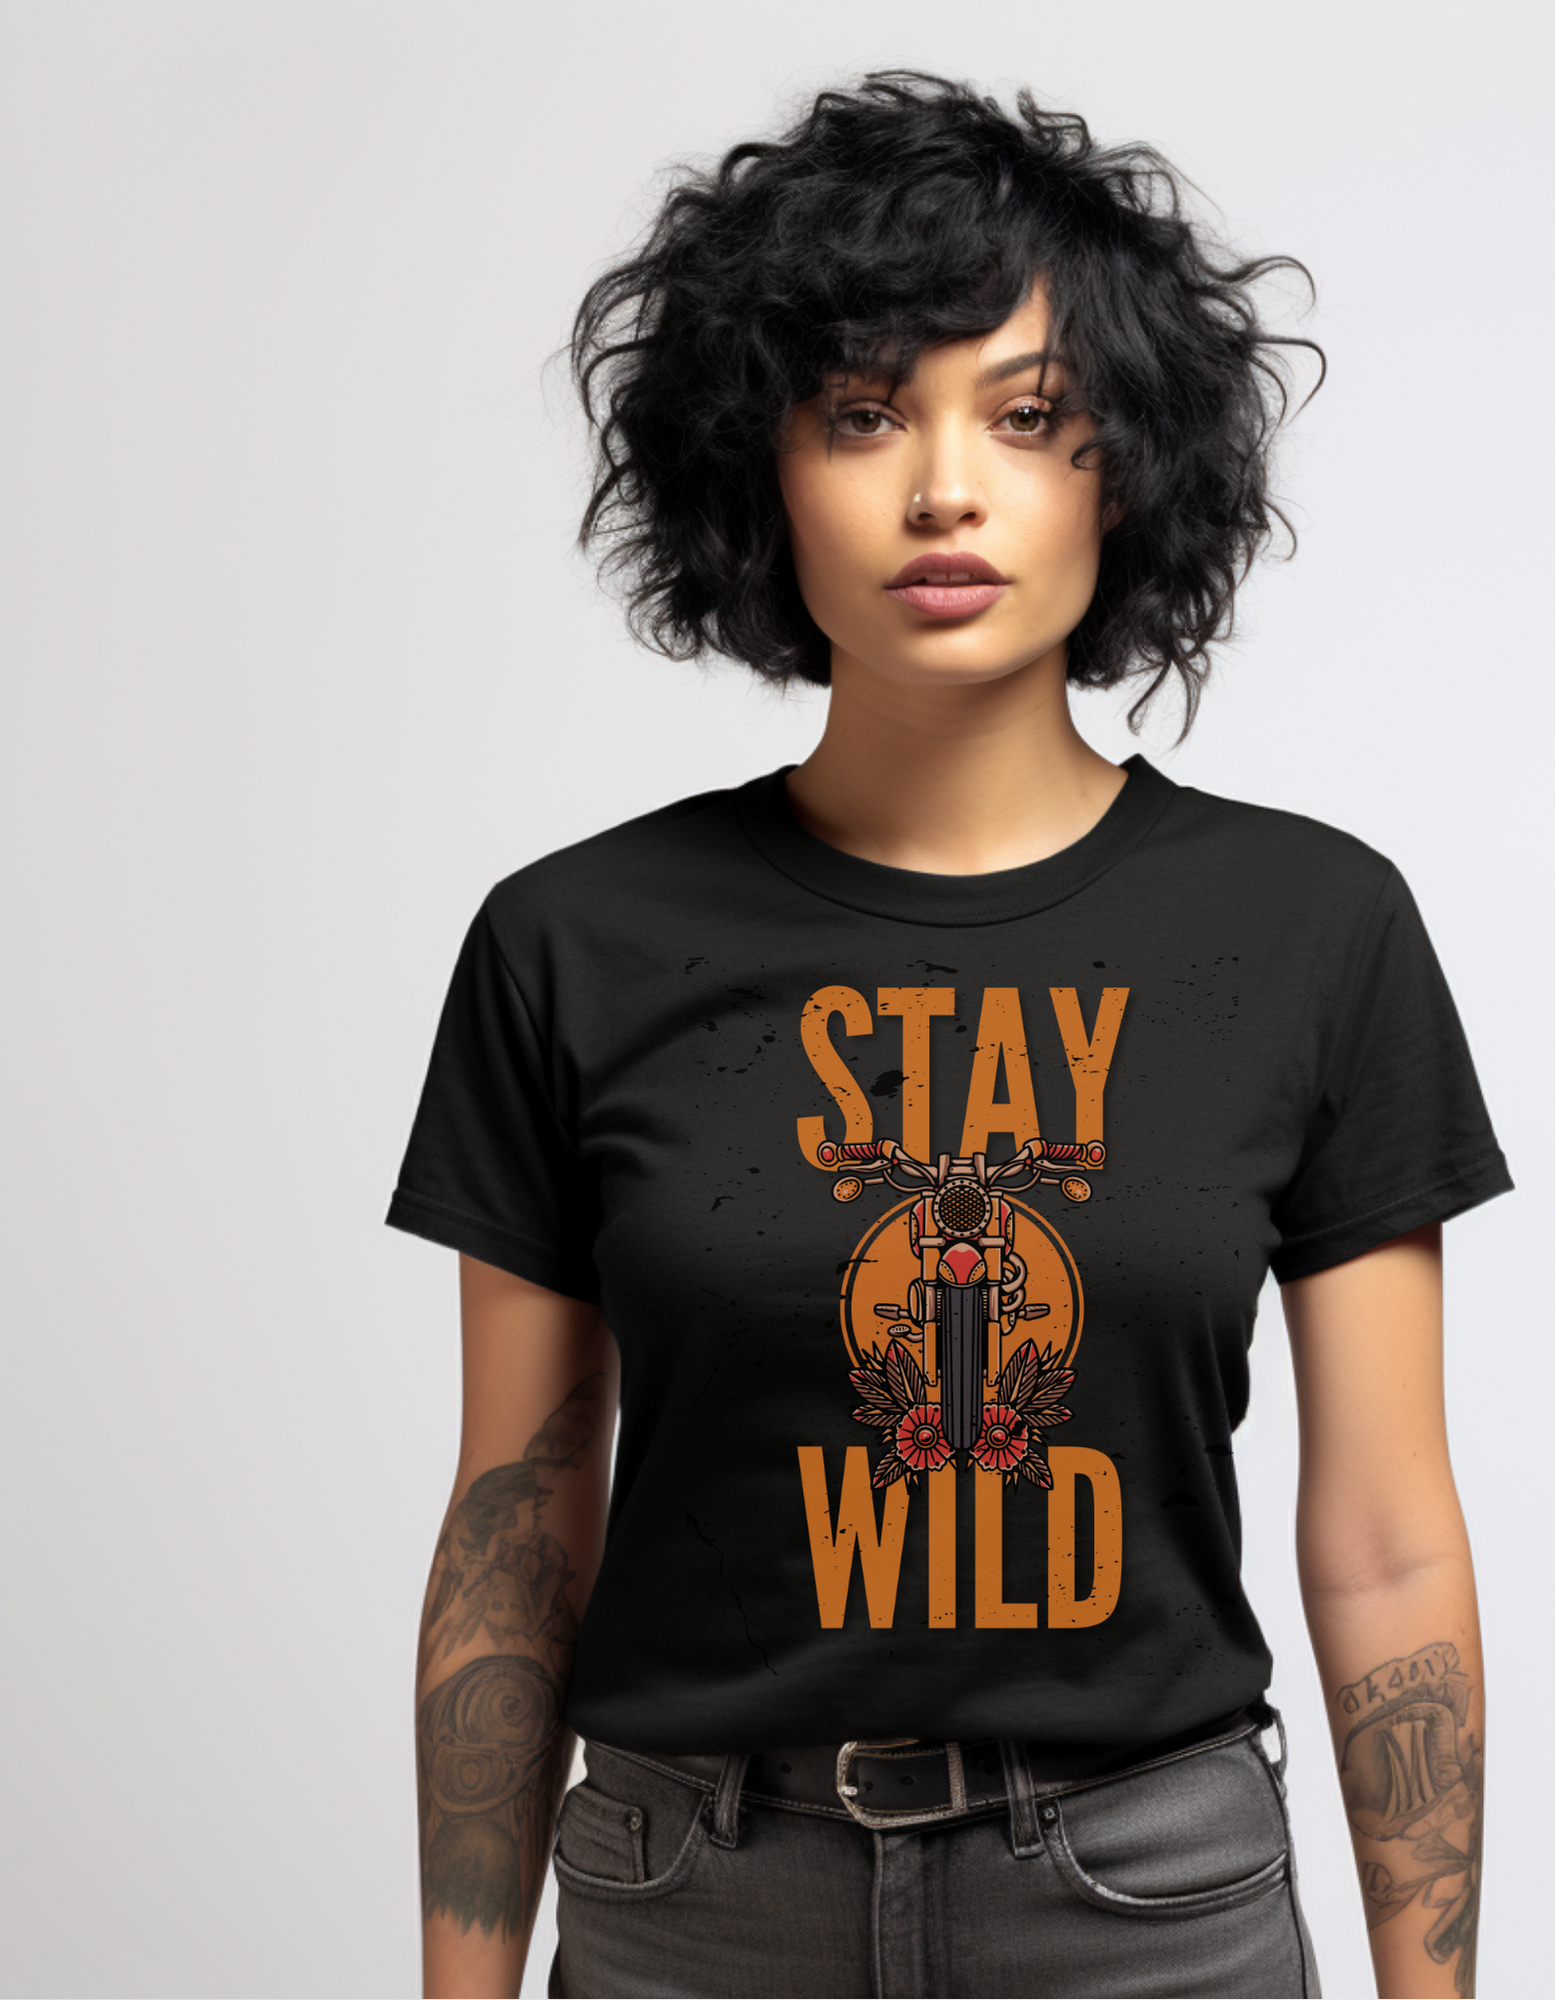 Stay Wild Tattoo T-shirt / Traditional Tattoo Tee Shirt / Punk Rock Clothing Tshirt Rockabilly Psychobilly Freak Goth - Foxlark Crystal Jewelry